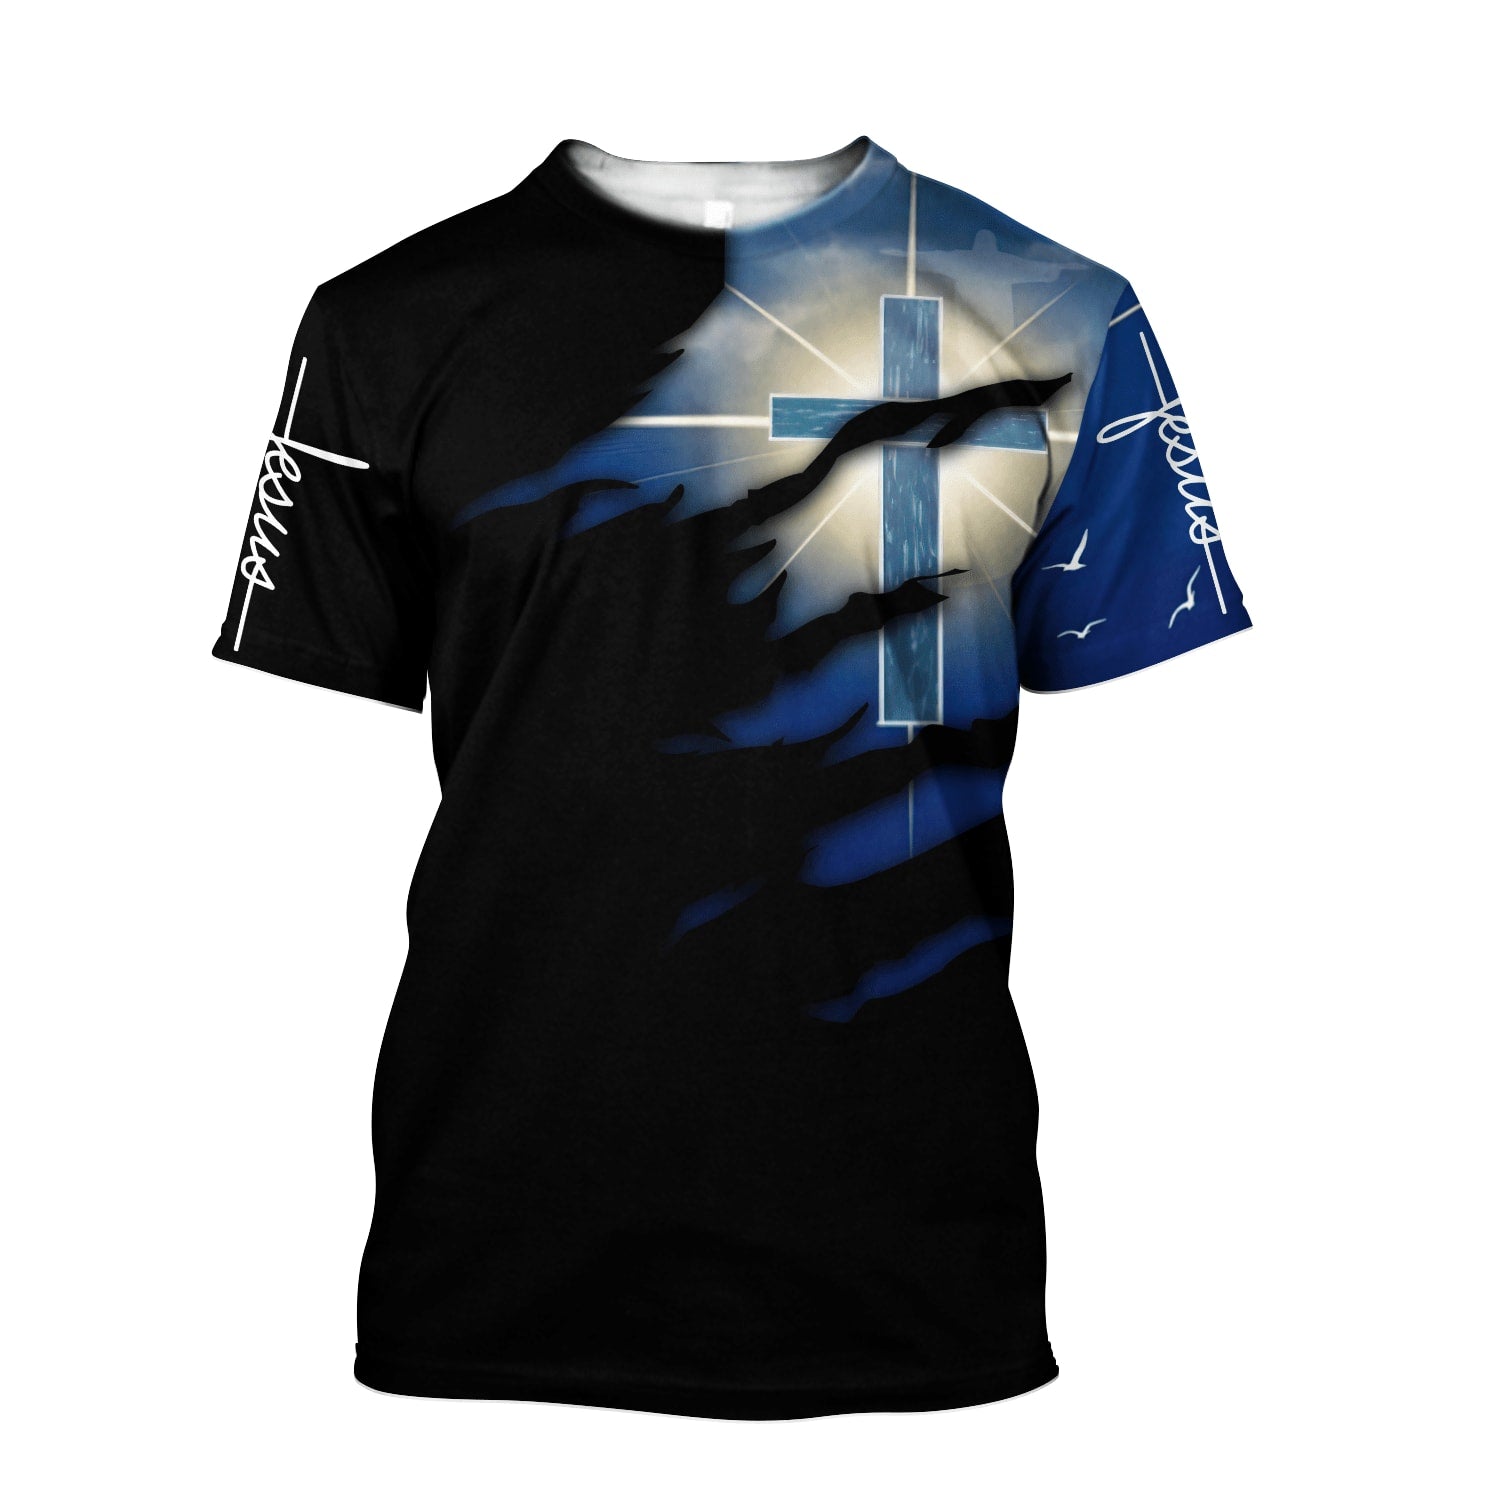 Glowing Light Cross Black And Blue Color Jesus Unisex Shirts - Christian 3d Shirts For Men Women